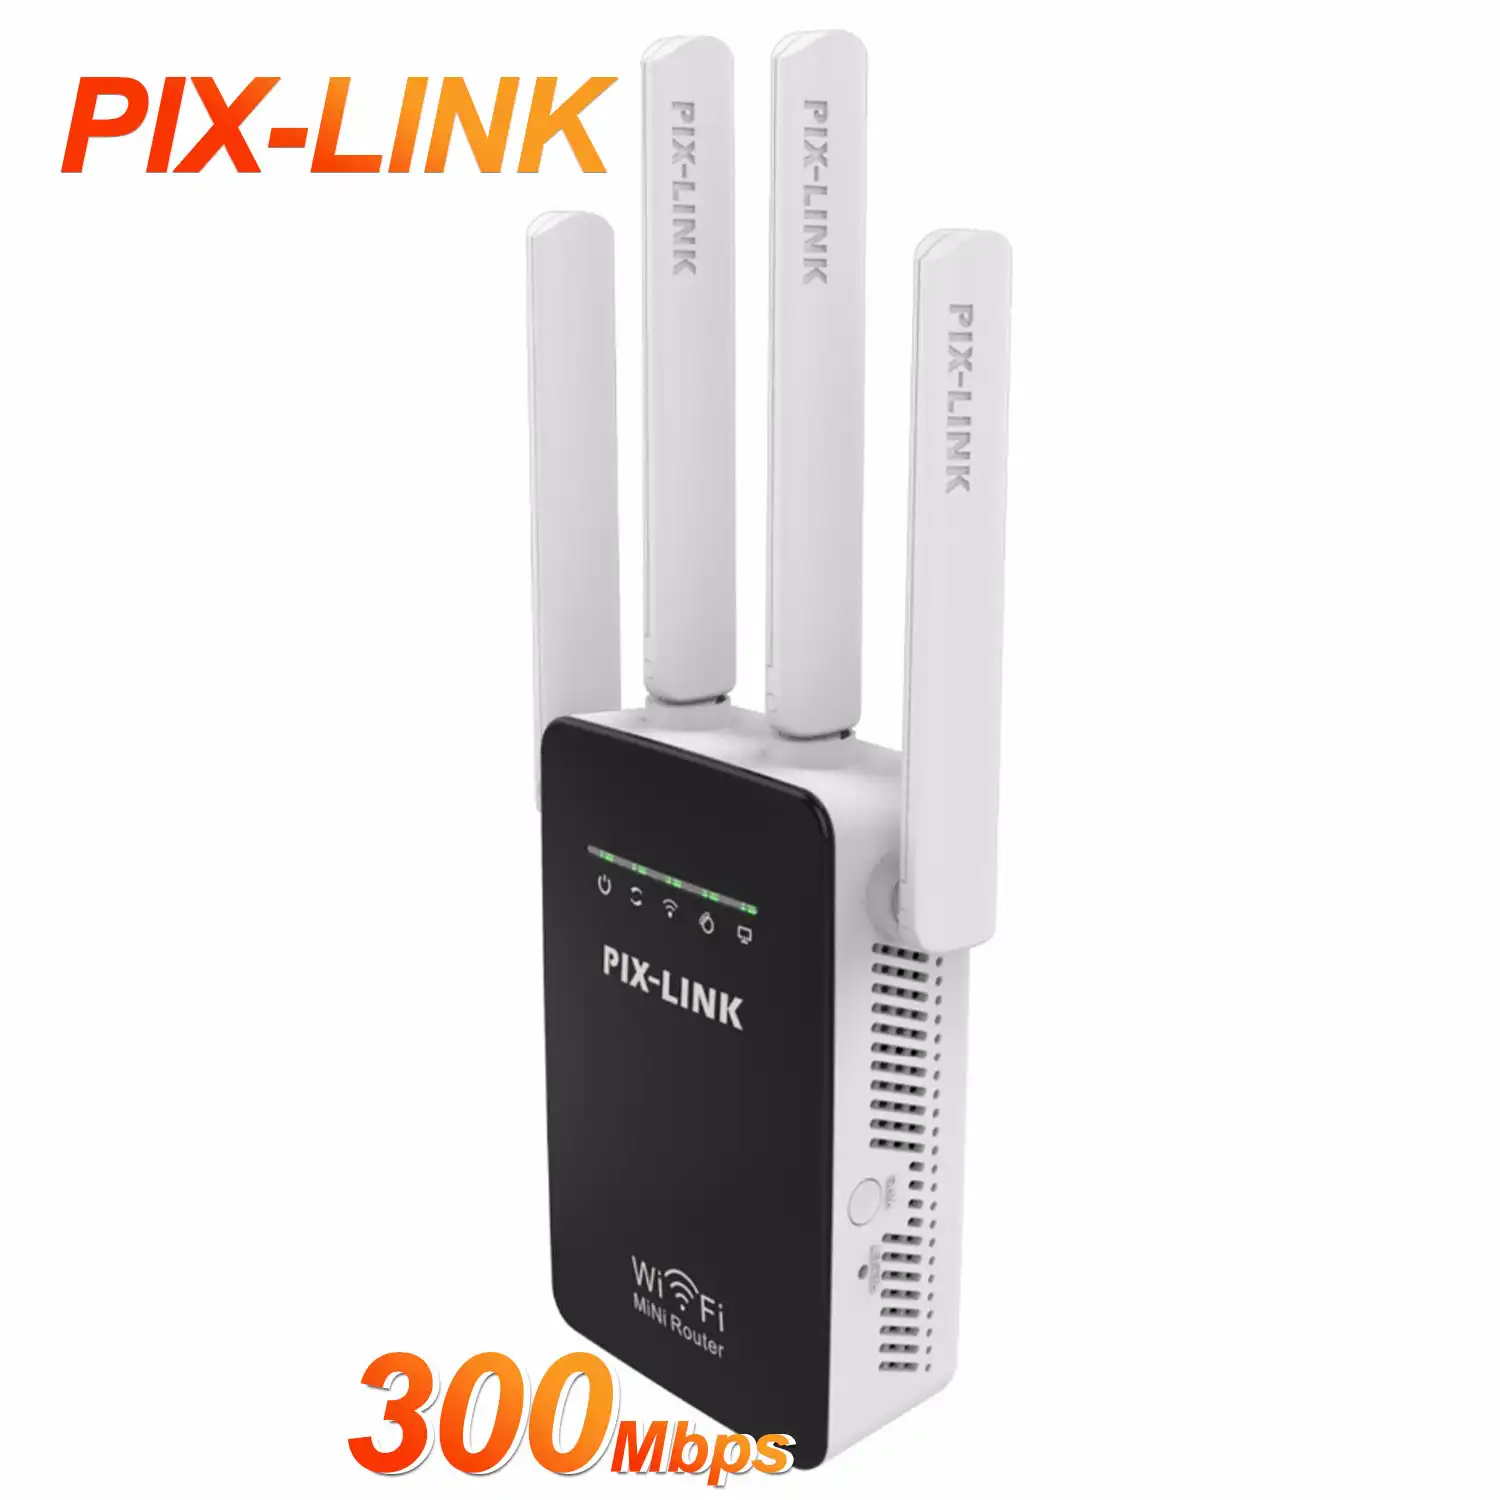 Pix-link 300mbps 2 portas wan lan, amplificador de sinal sem fio, wi-fi, repetidor, roteador